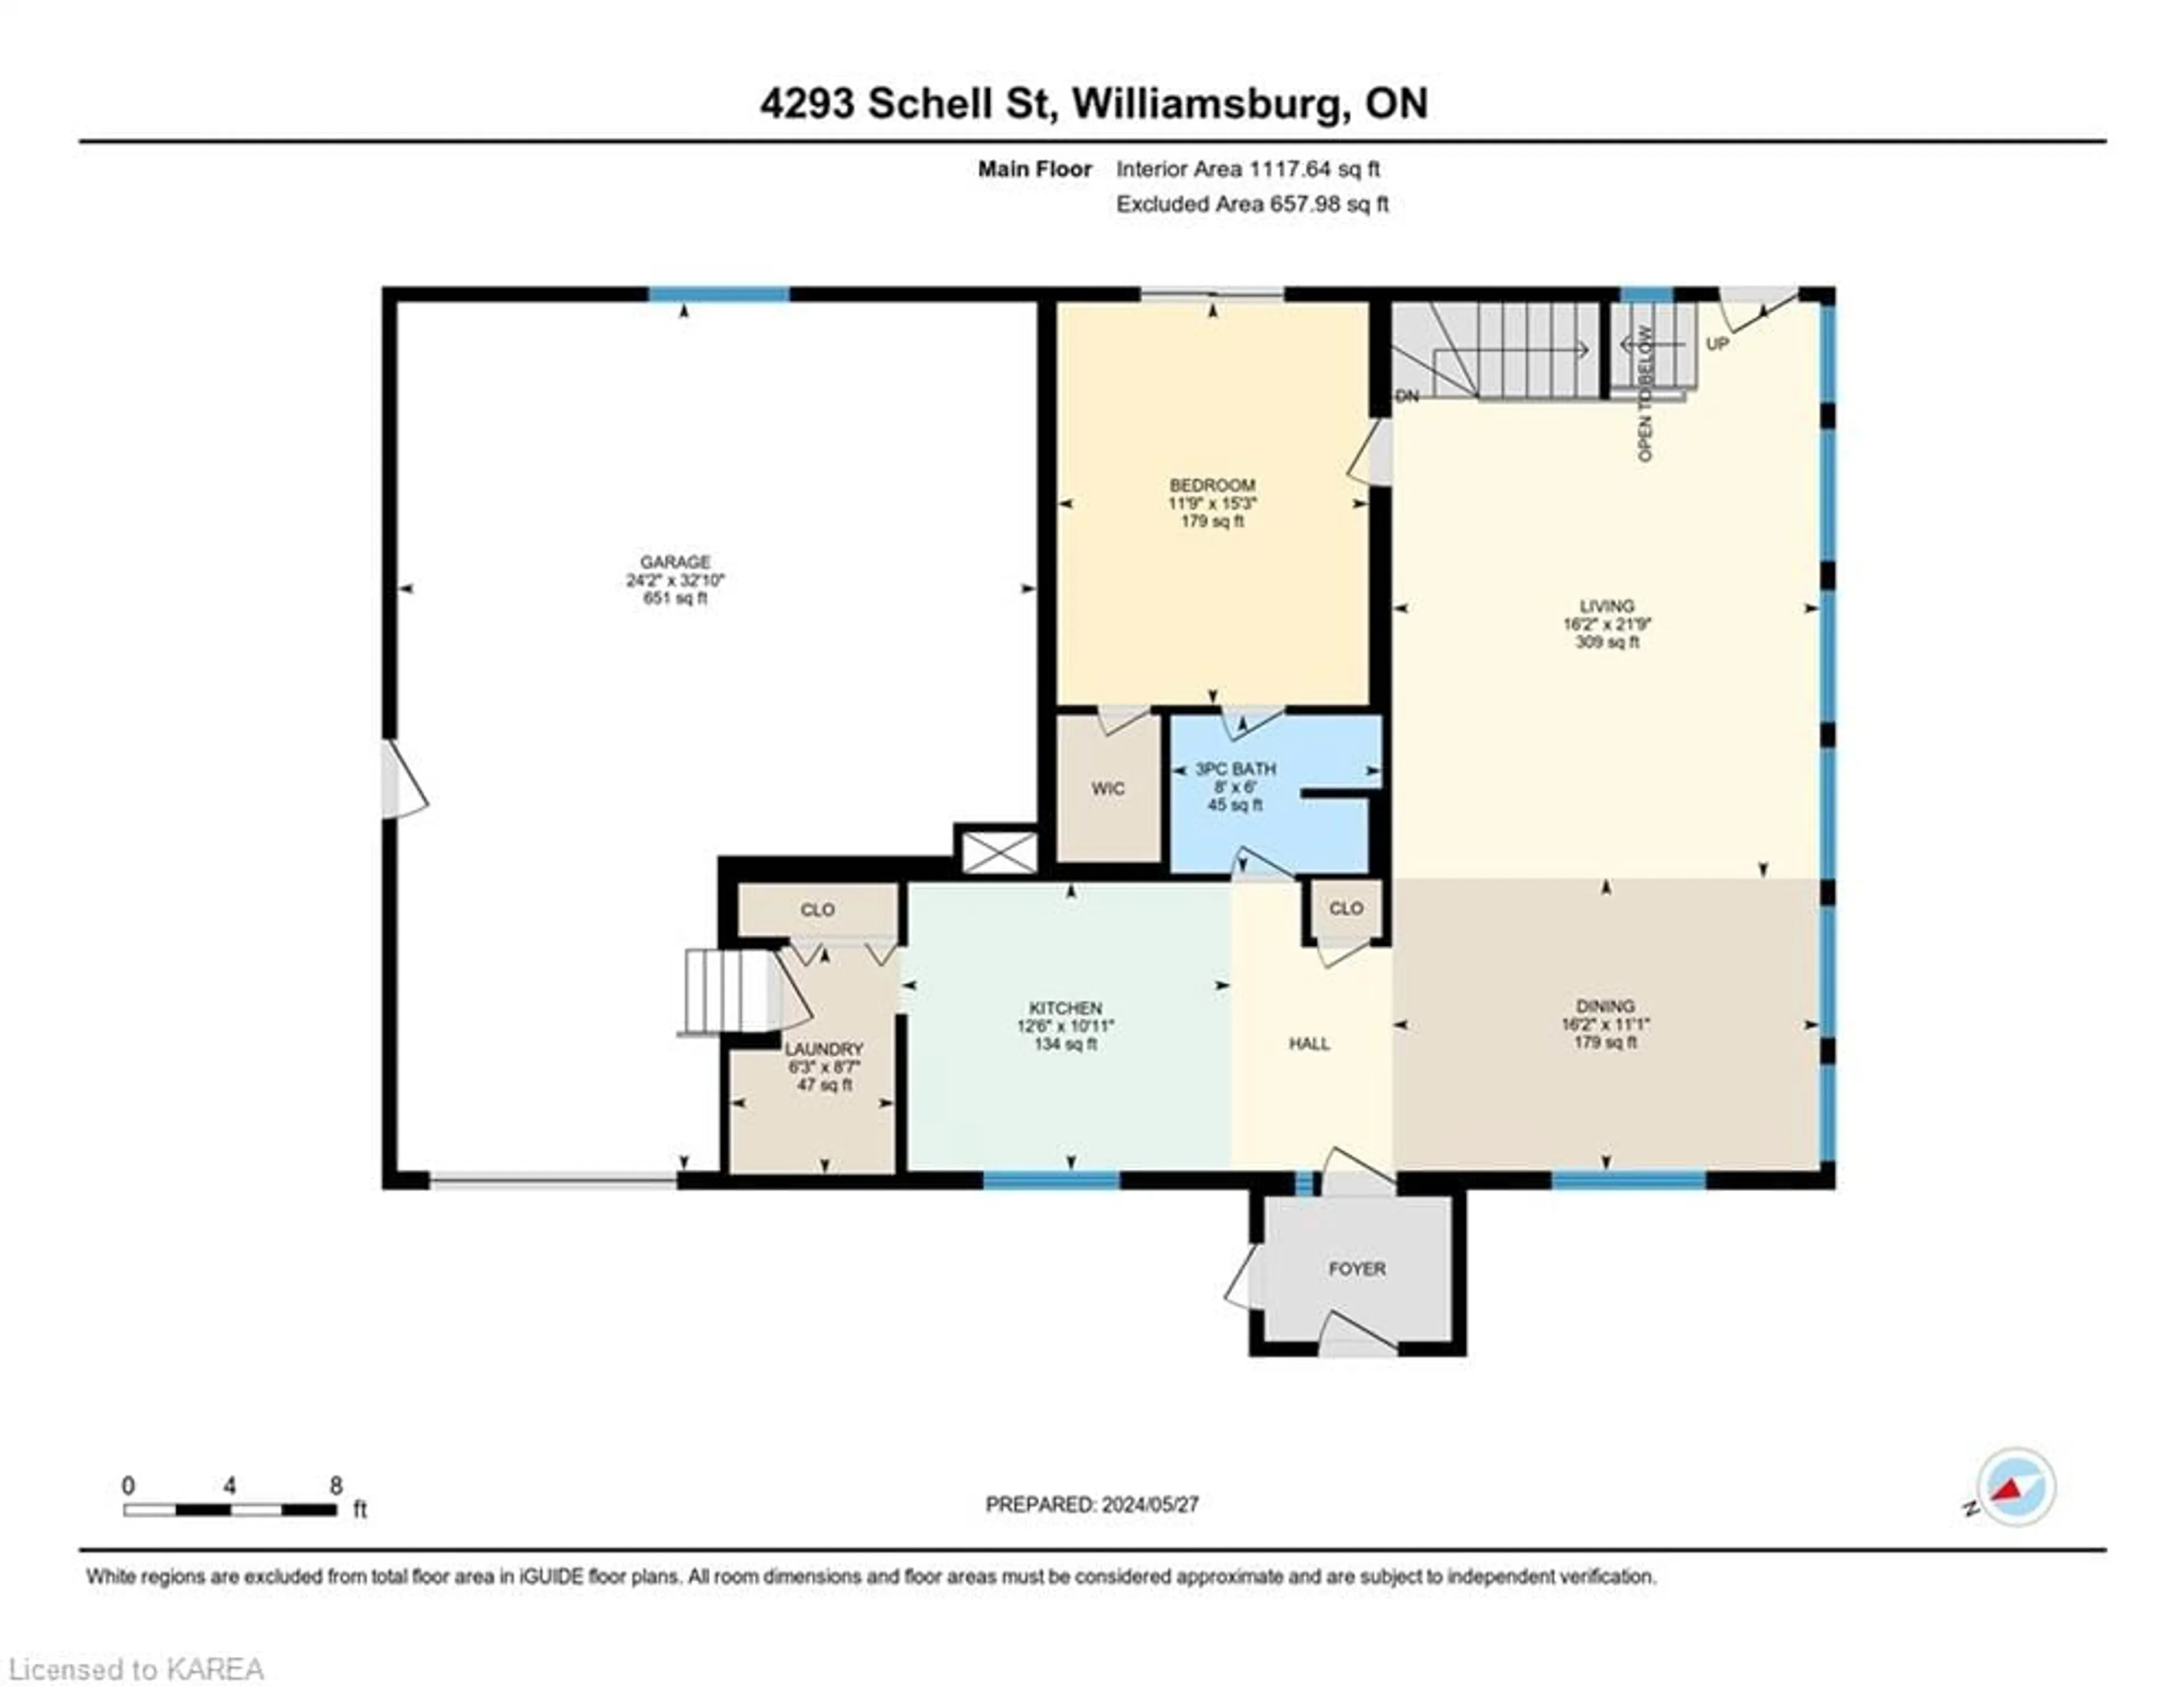 Floor plan for 4293 Schell St, Williamsburg Ontario K0C 2H0